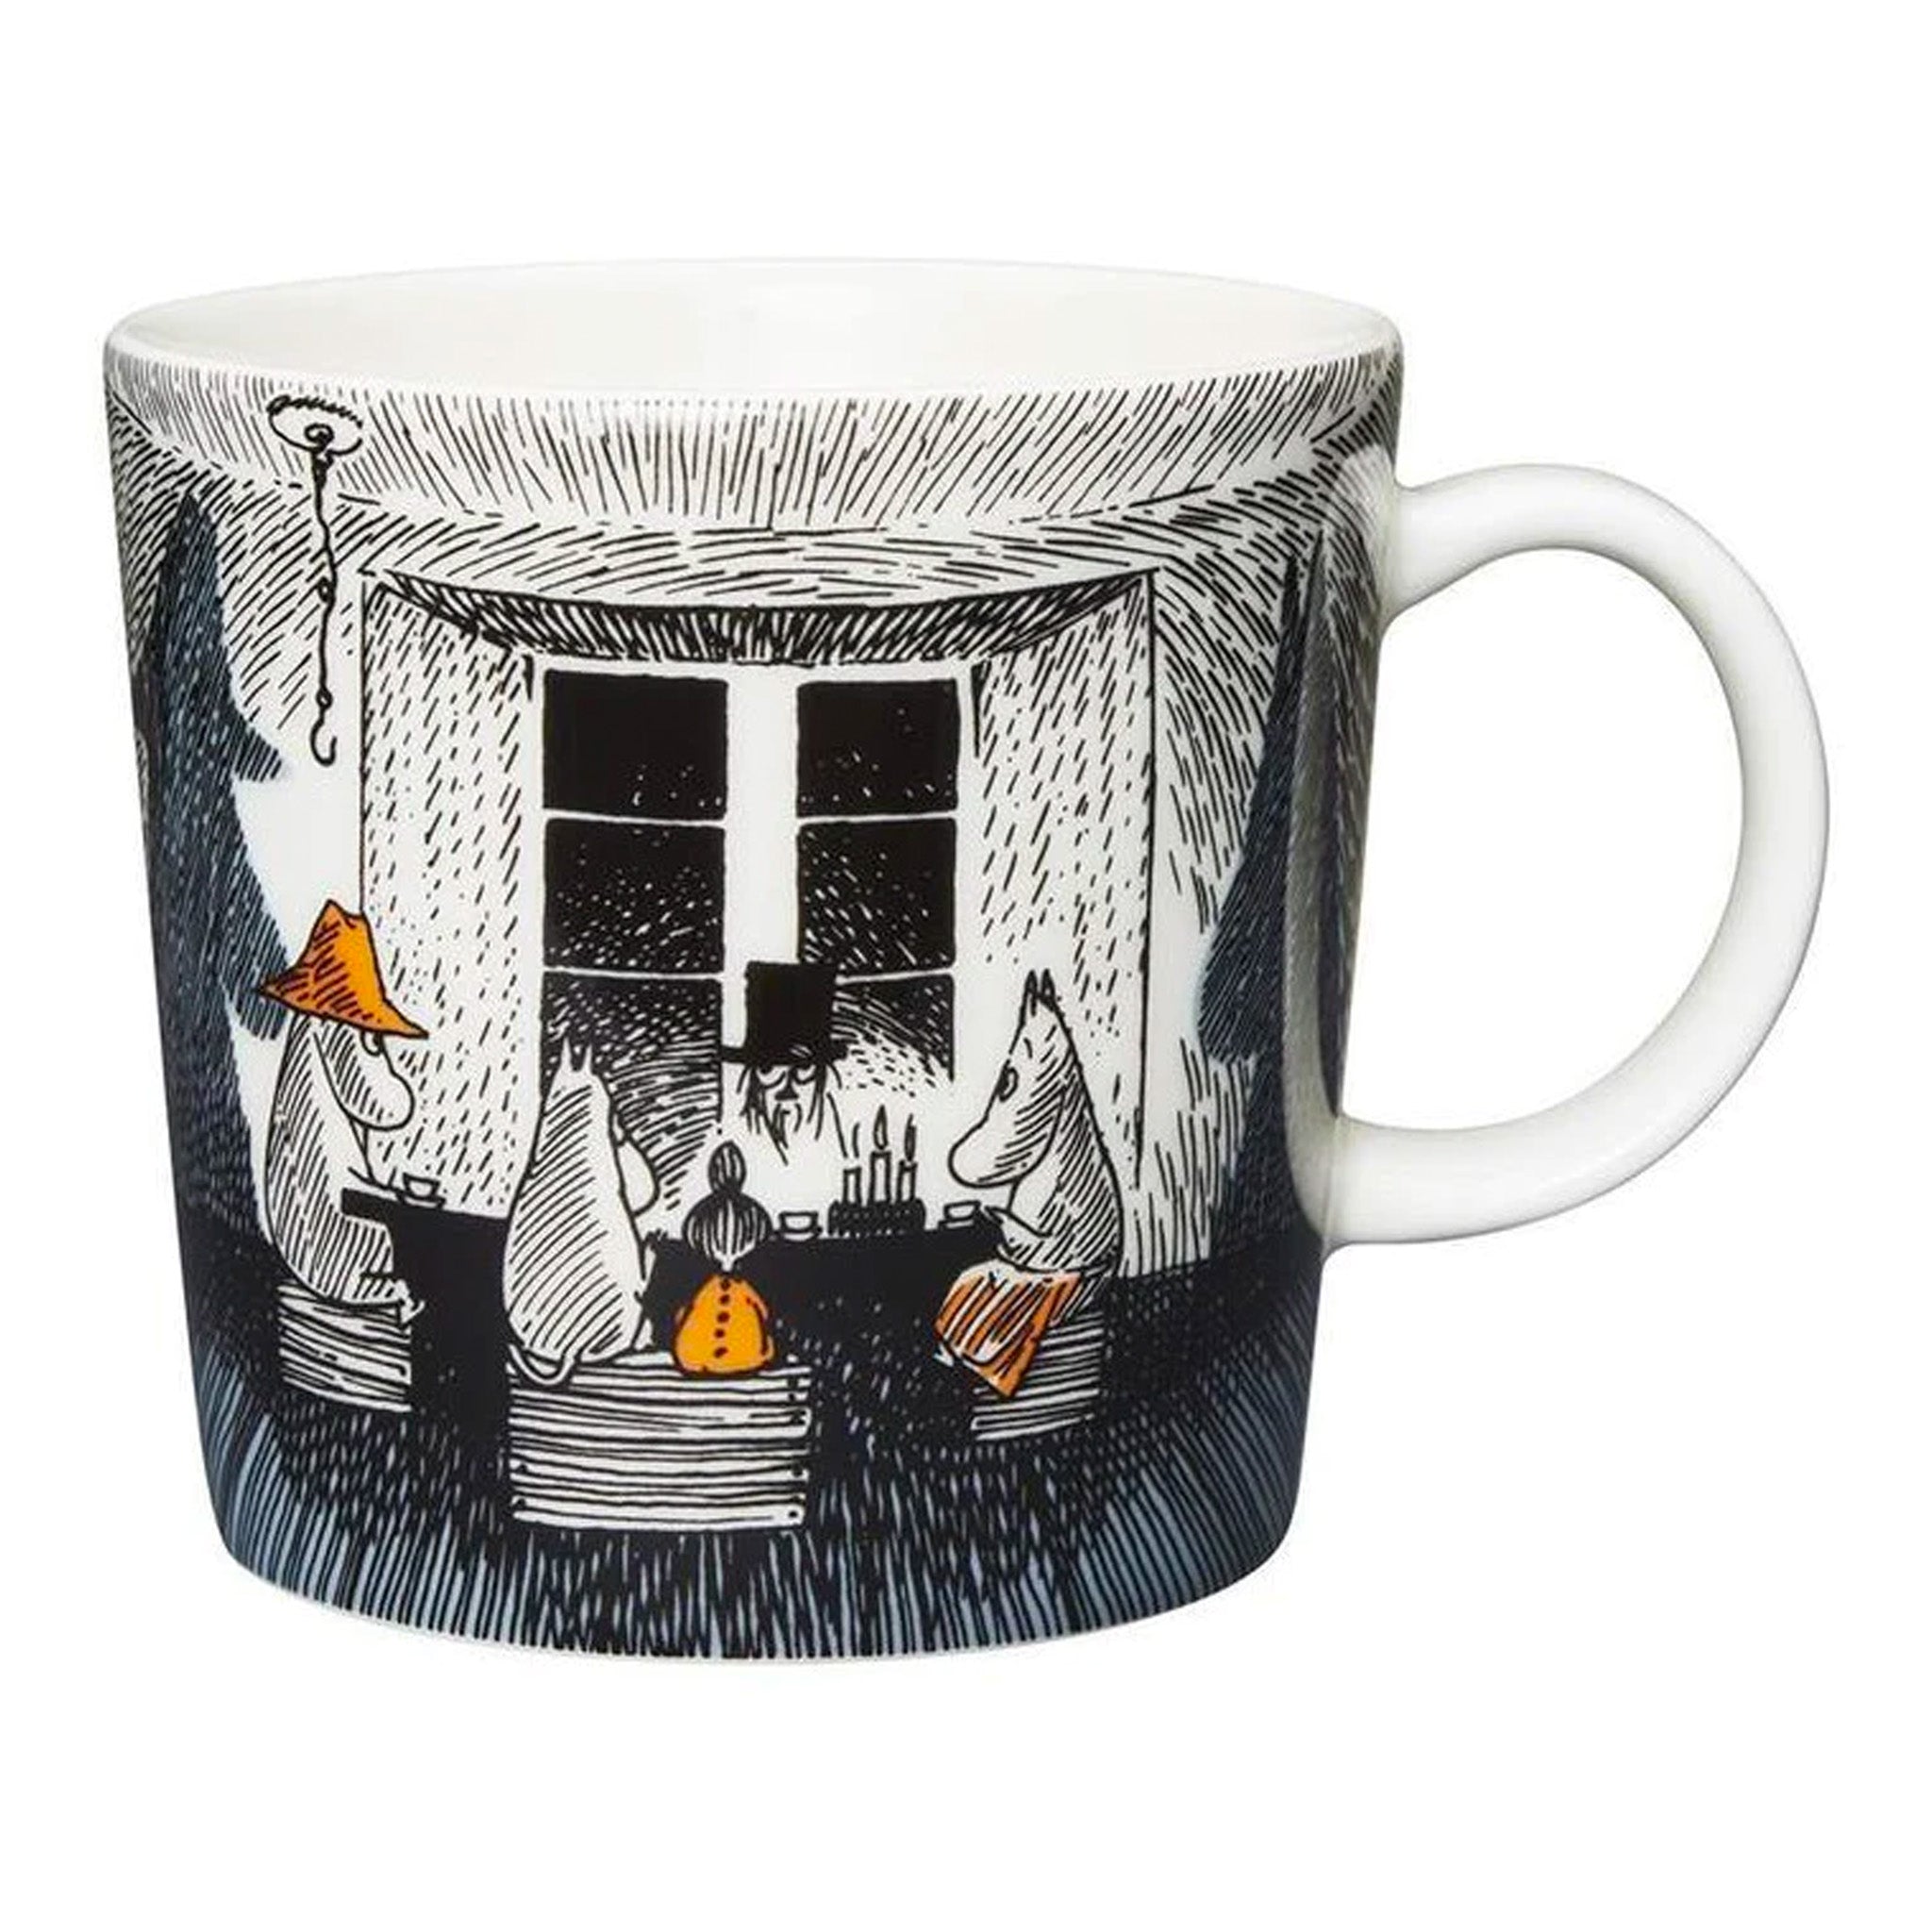 Moomin Mugs by Tove Jansson